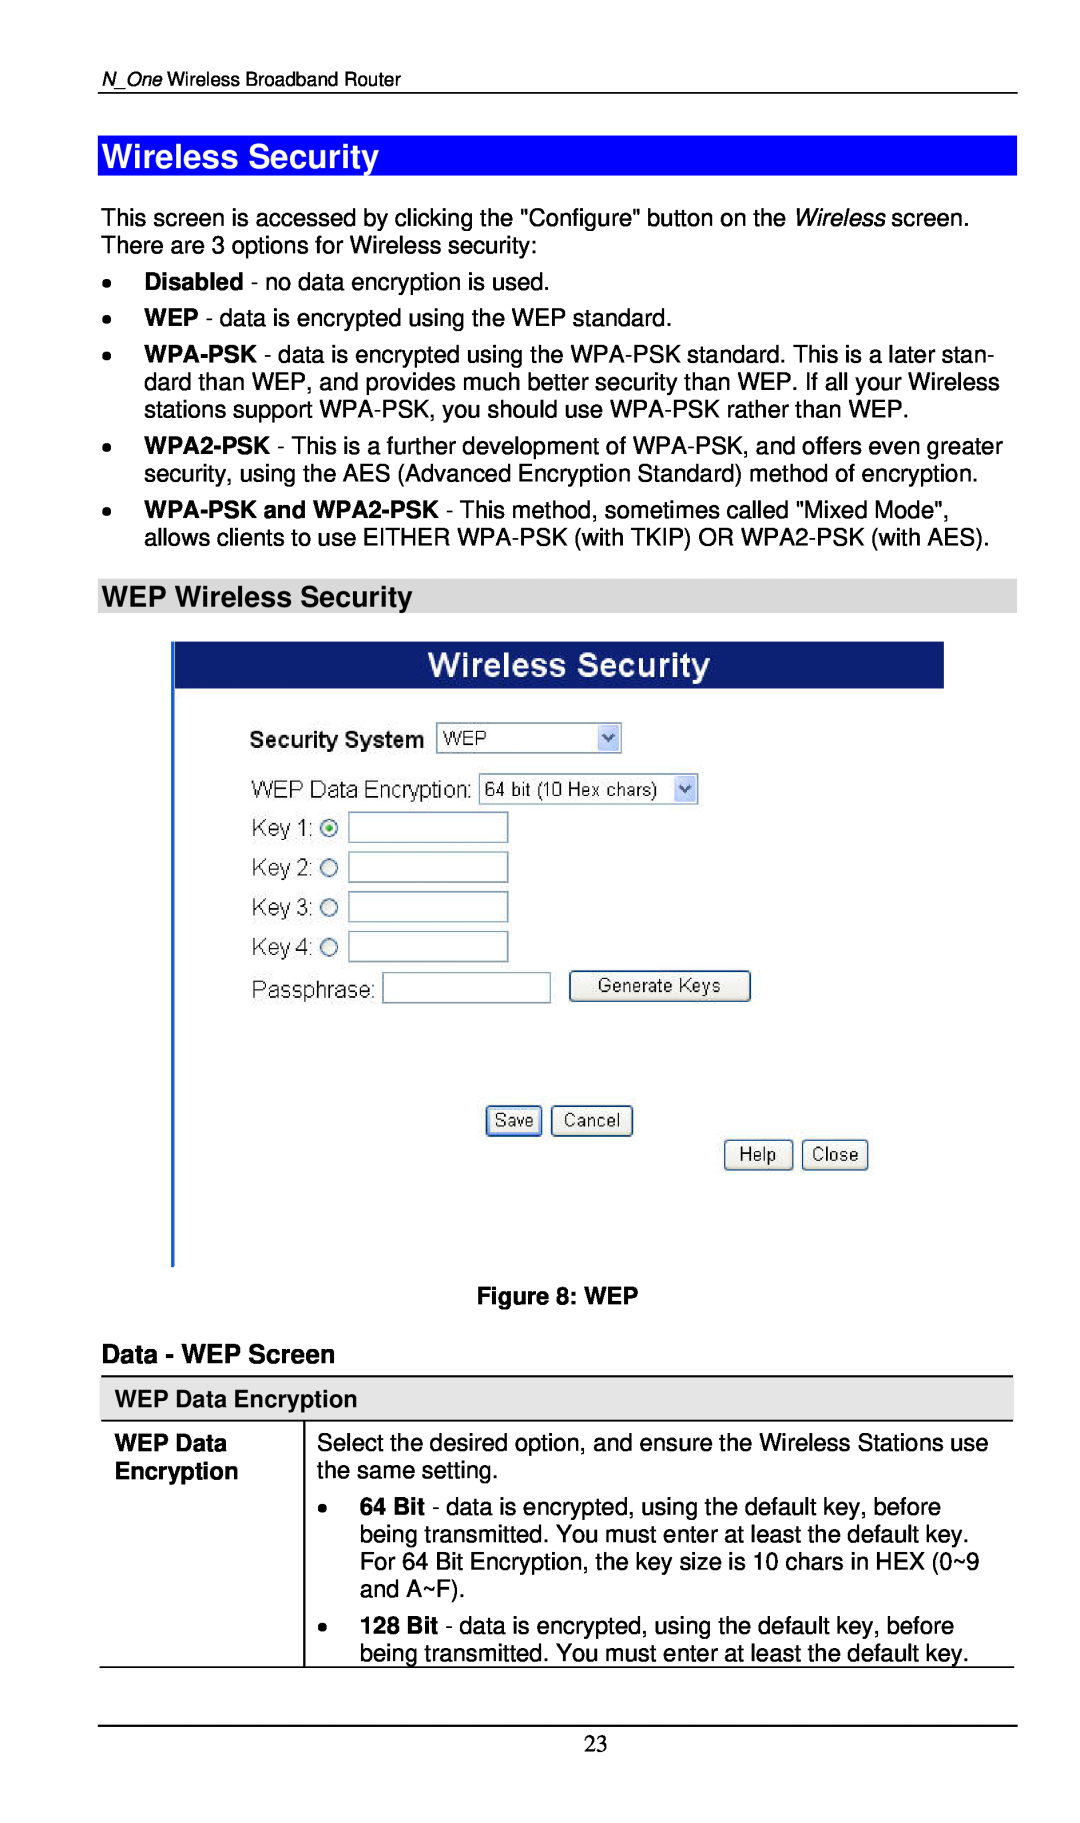 LevelOne WBR-6000 user manual WEP Wireless Security, Wep, WEP Data Encryption 